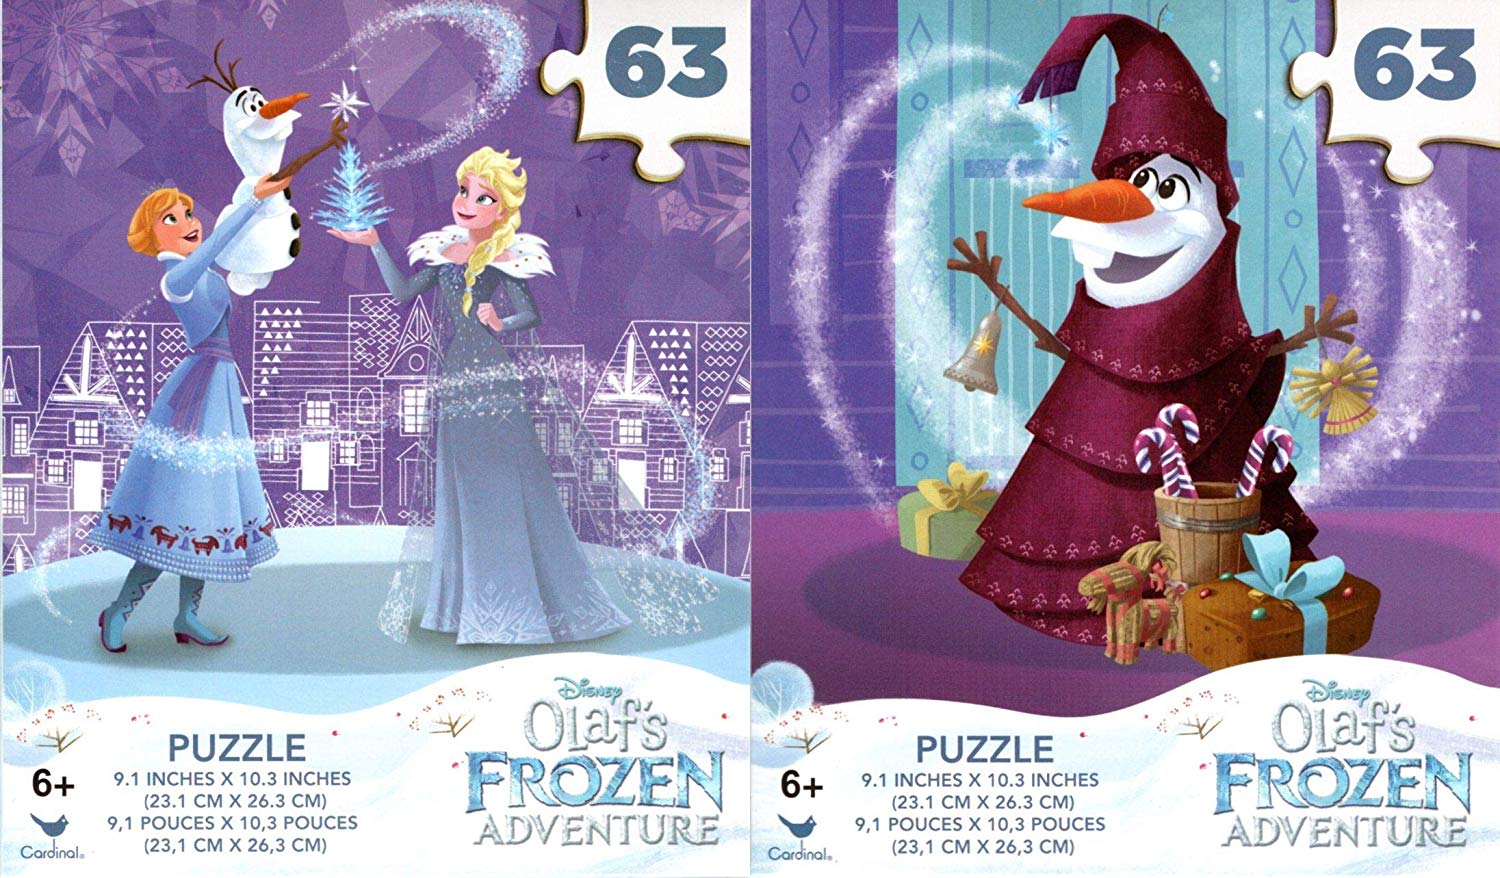 Disney OLAF´S FROZEN Eiskönigin Puzzle 63 Teile Elsa & Olaf Geschenkidee OVP*